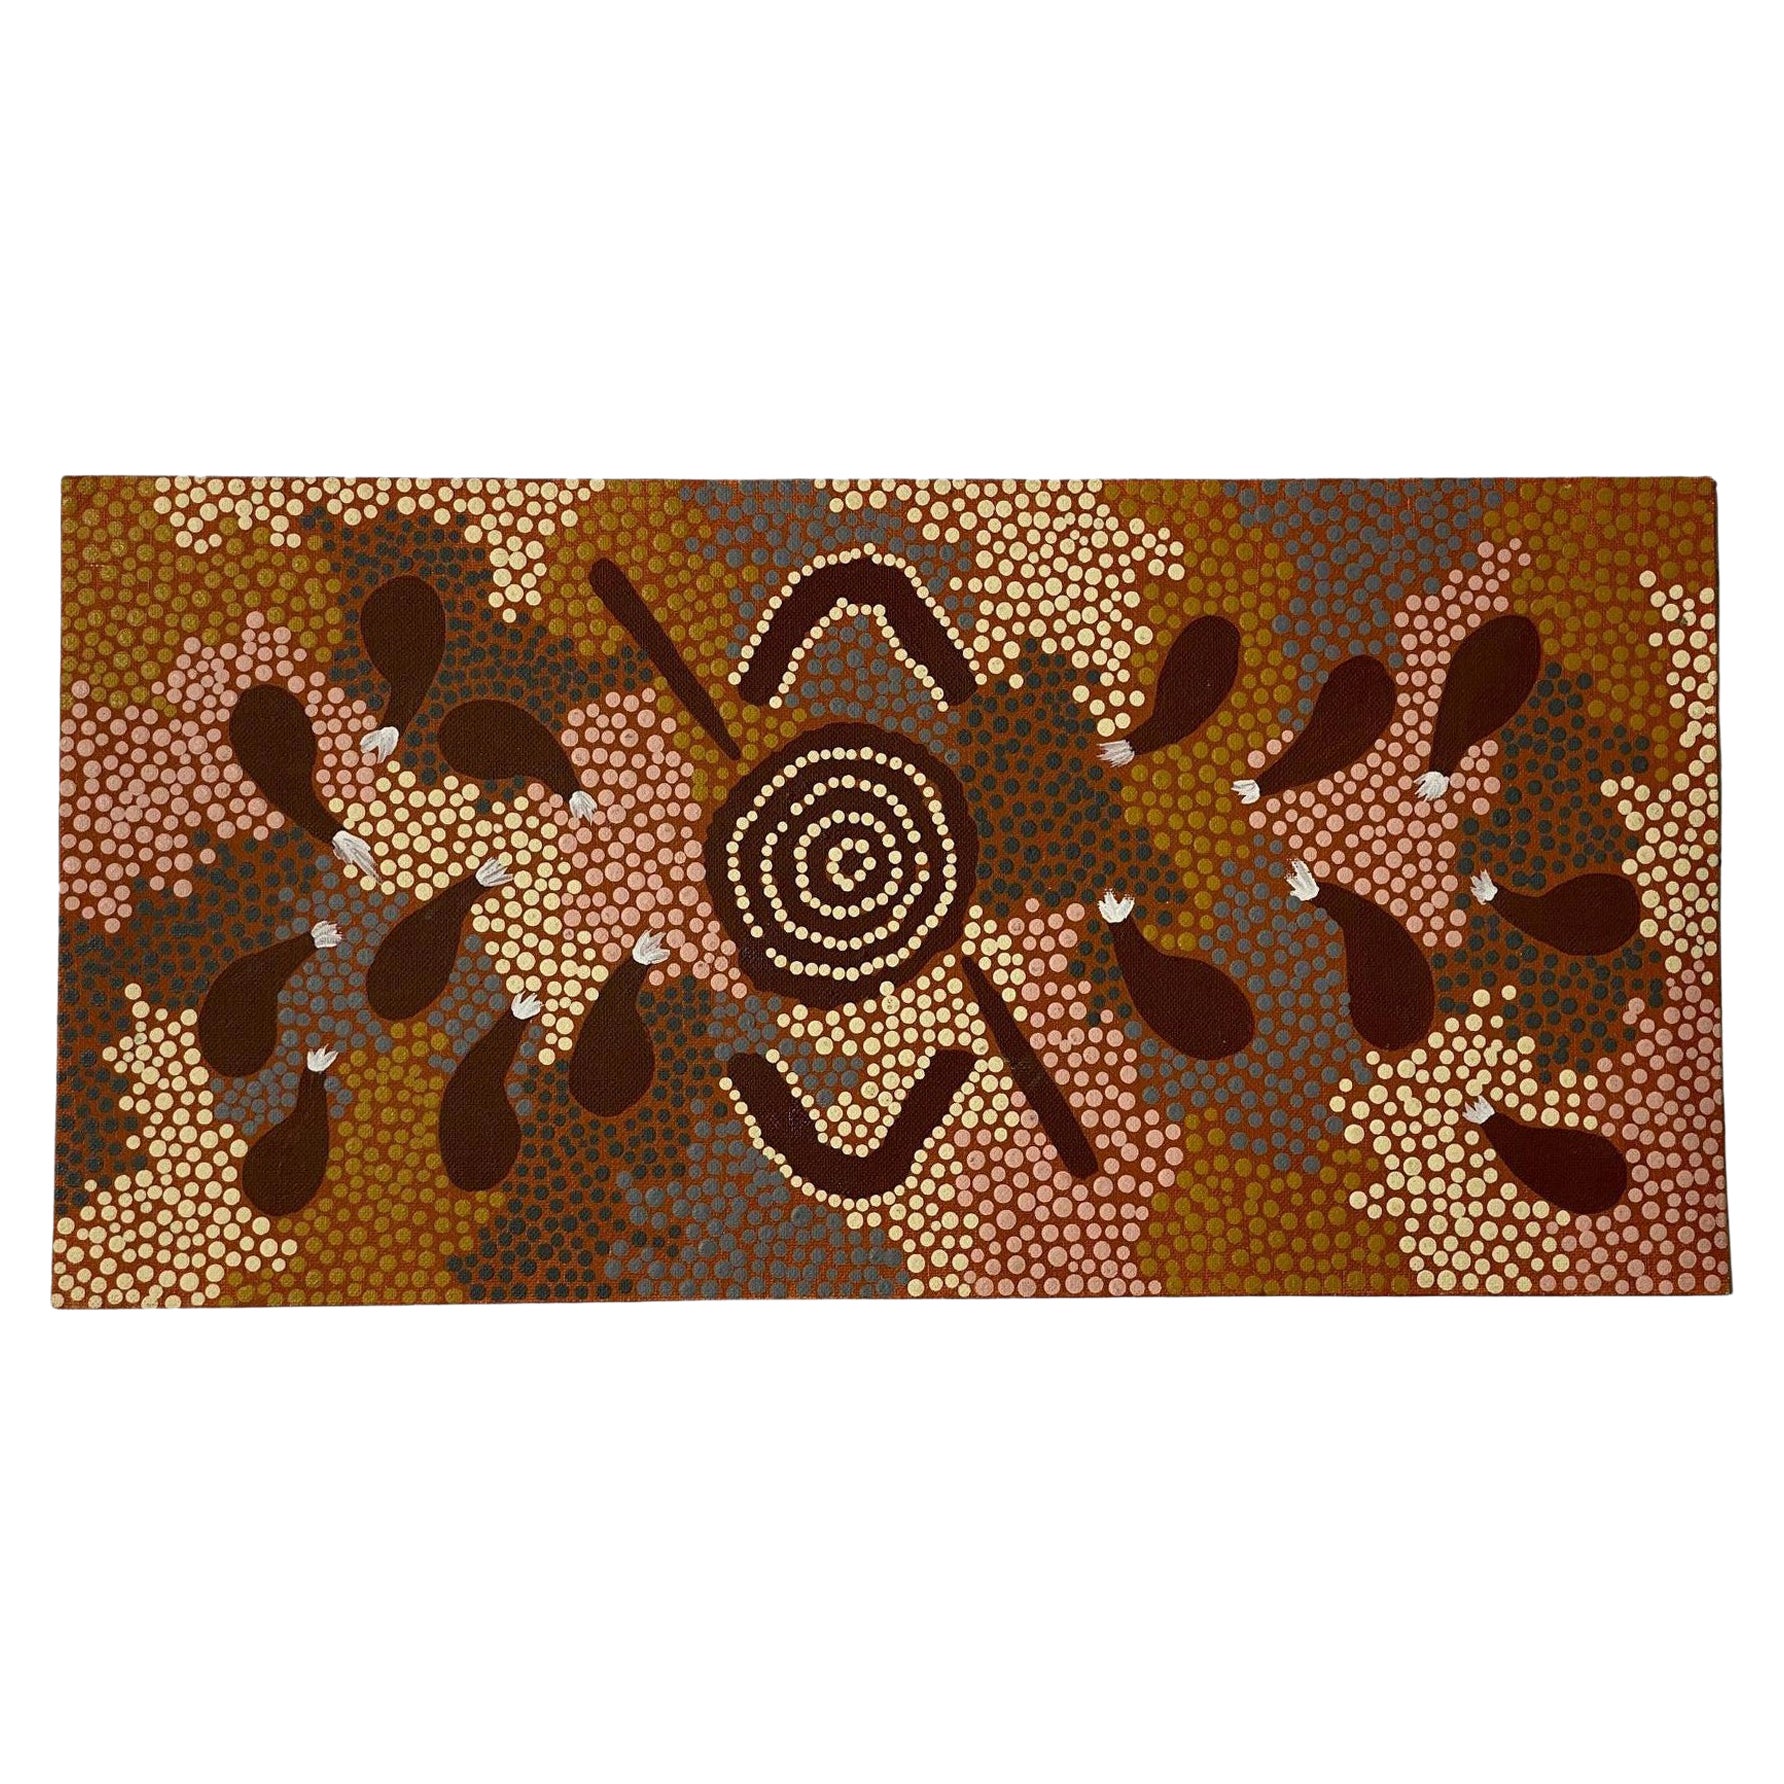 Clifford Possum Tjapaltjarri Signed Indigenous Aboriginal Art Original Painting  For Sale